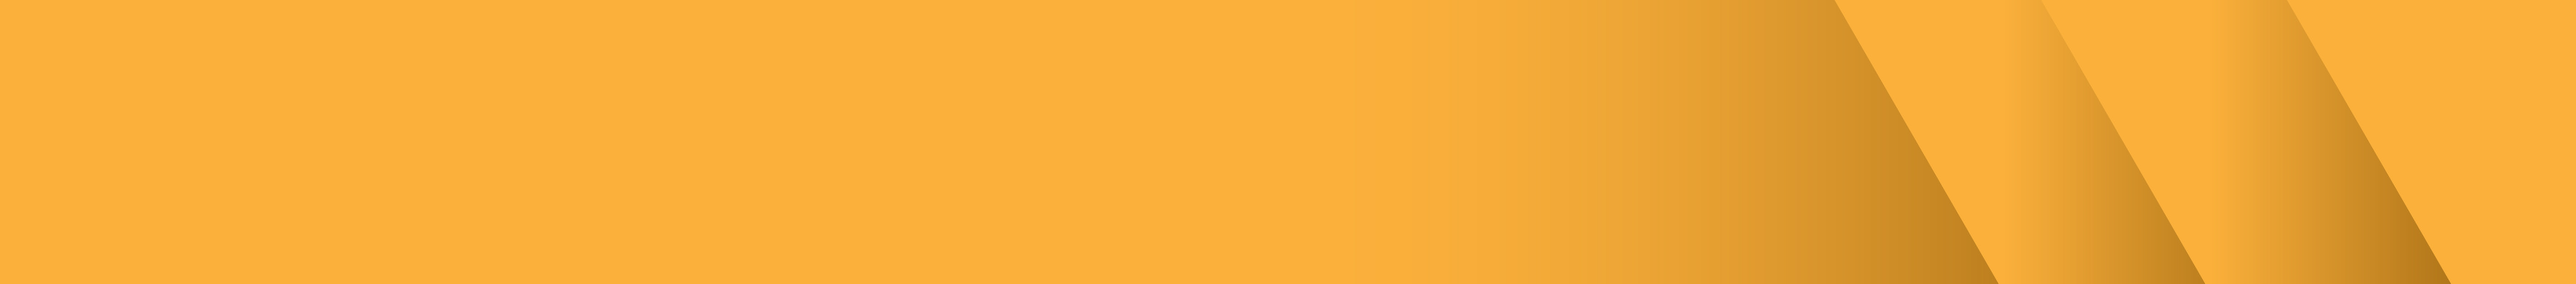 Jeroen Slee's profile banner